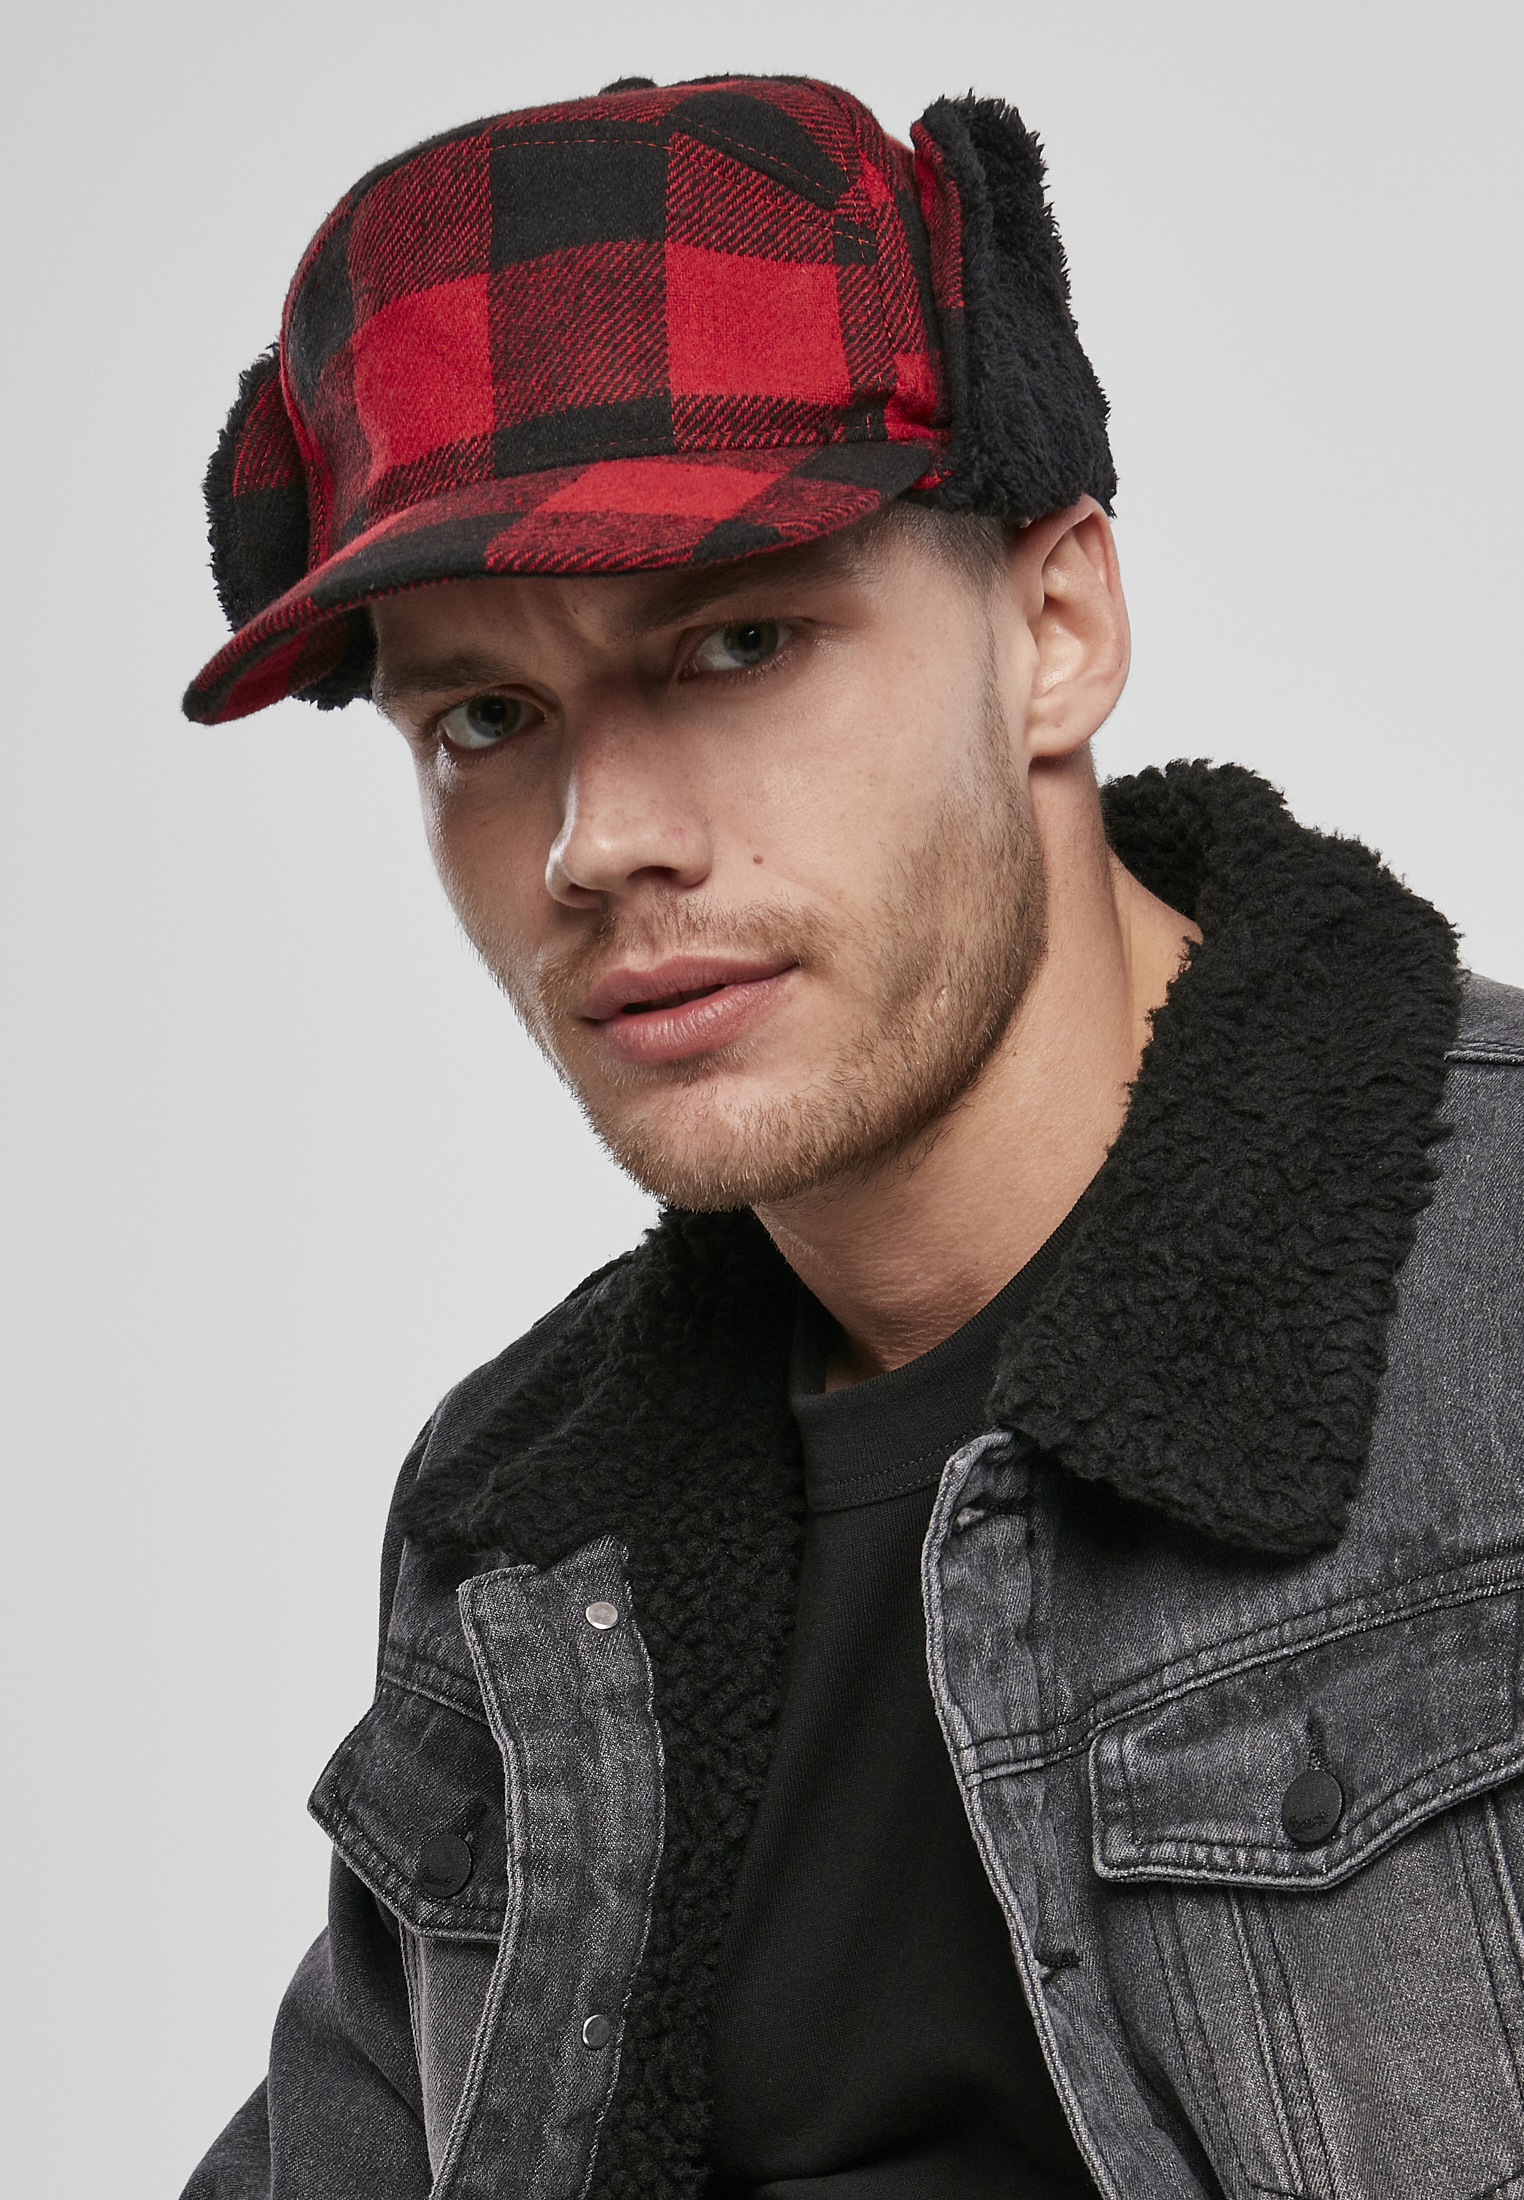 Lumberjack Winter Hat Red/Black